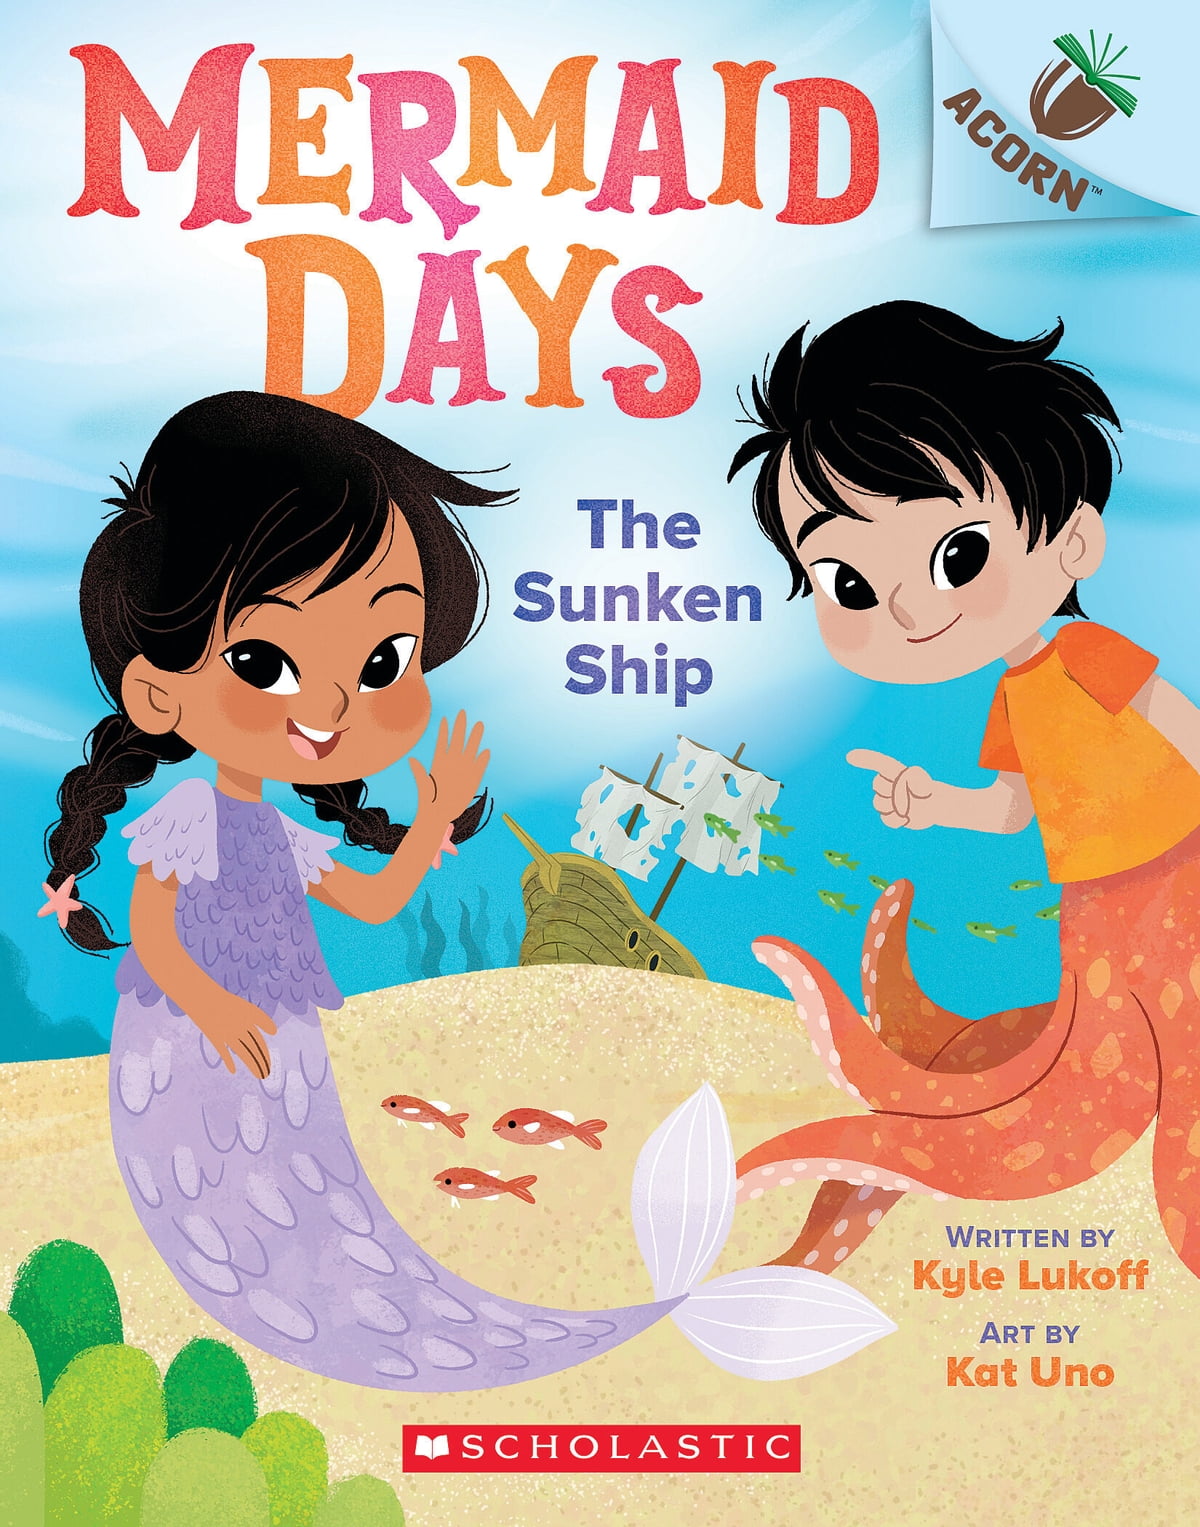 The Sunken Ship book cover.